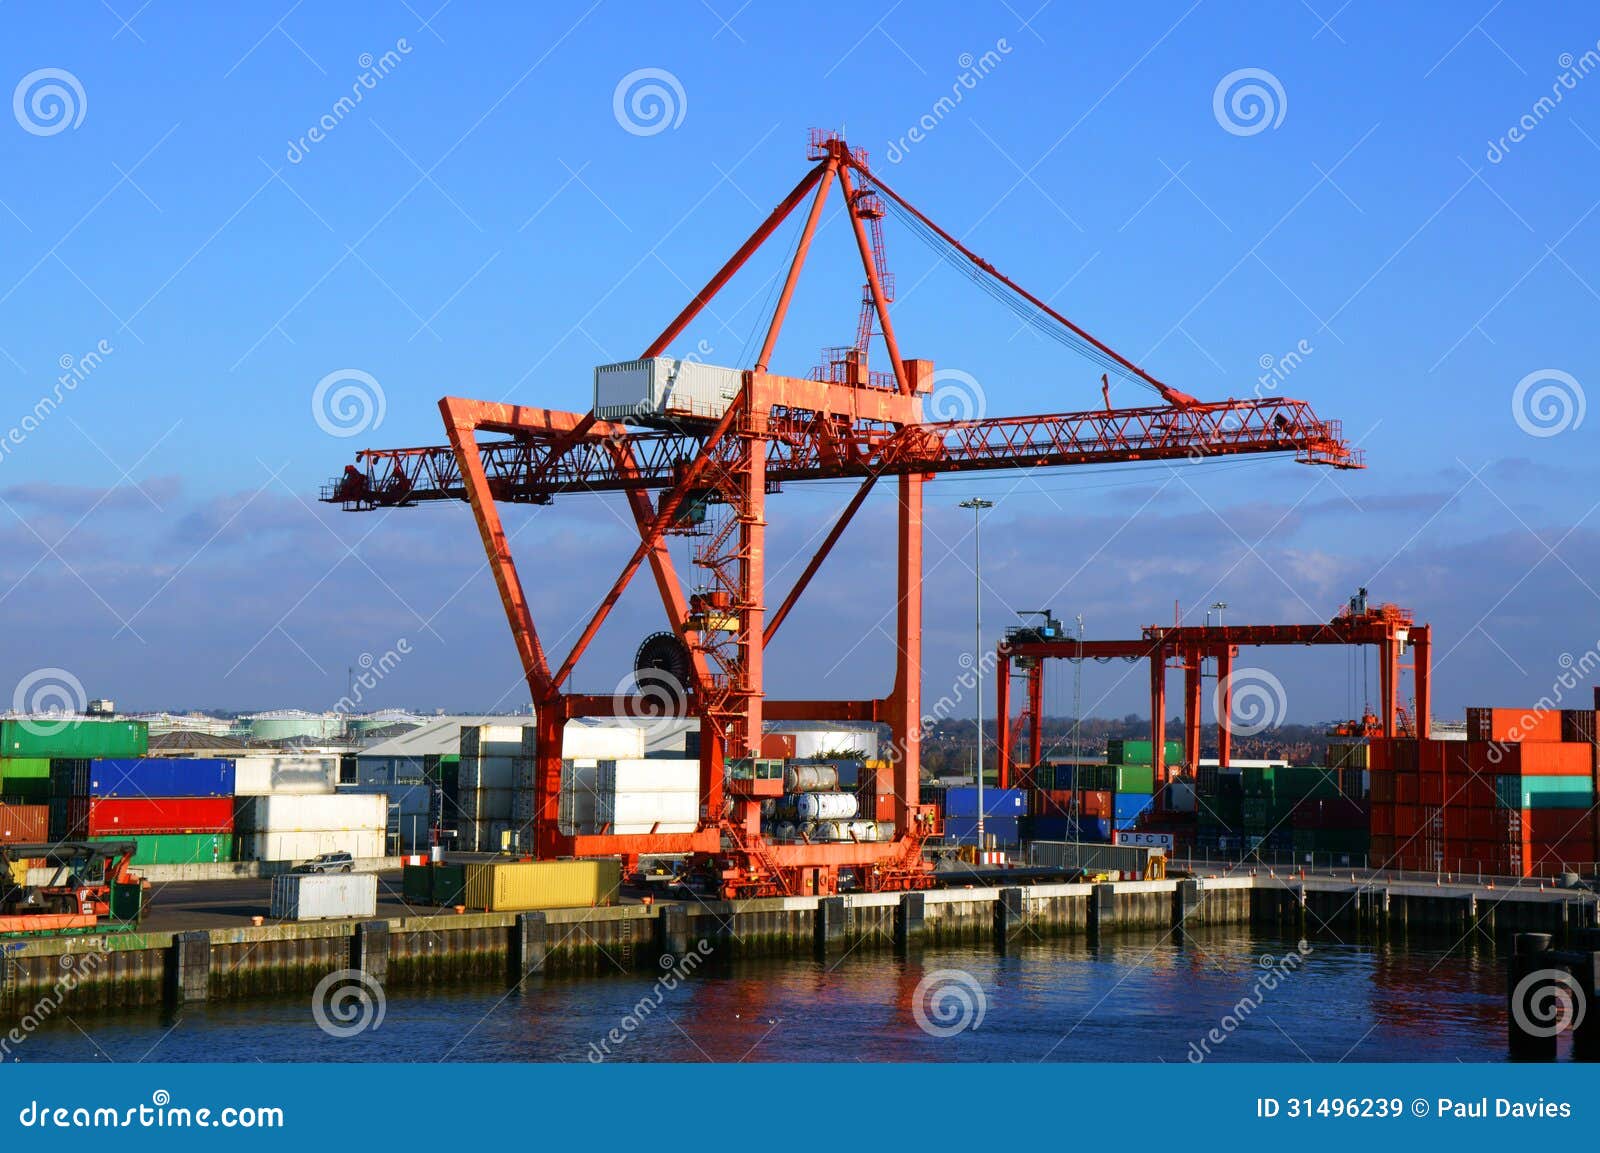 container loading crane, dublin port